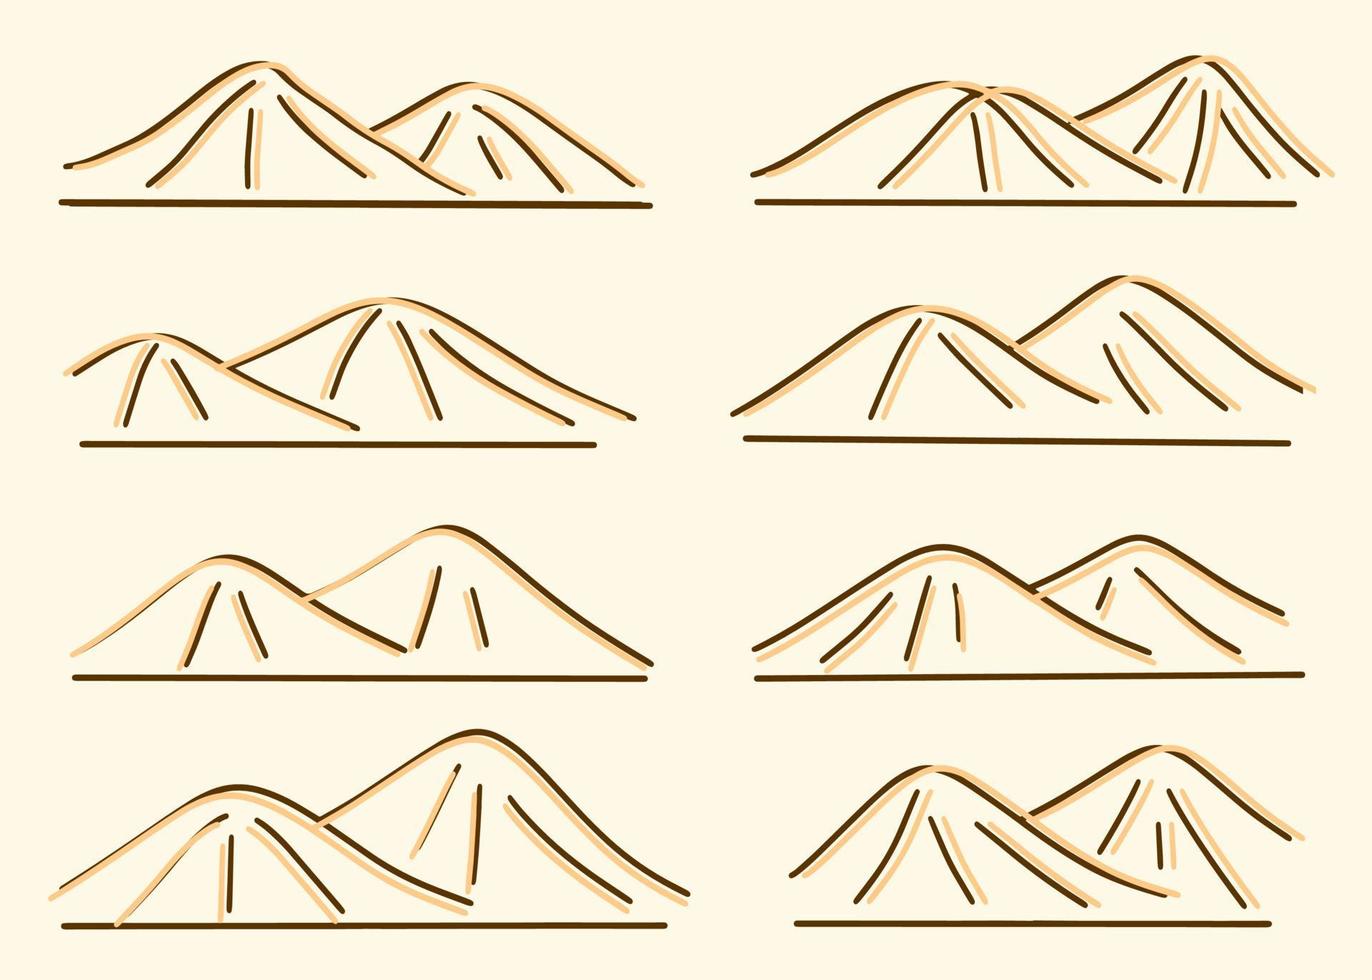 Mountain Set Simple Modern Line Art illustration vector